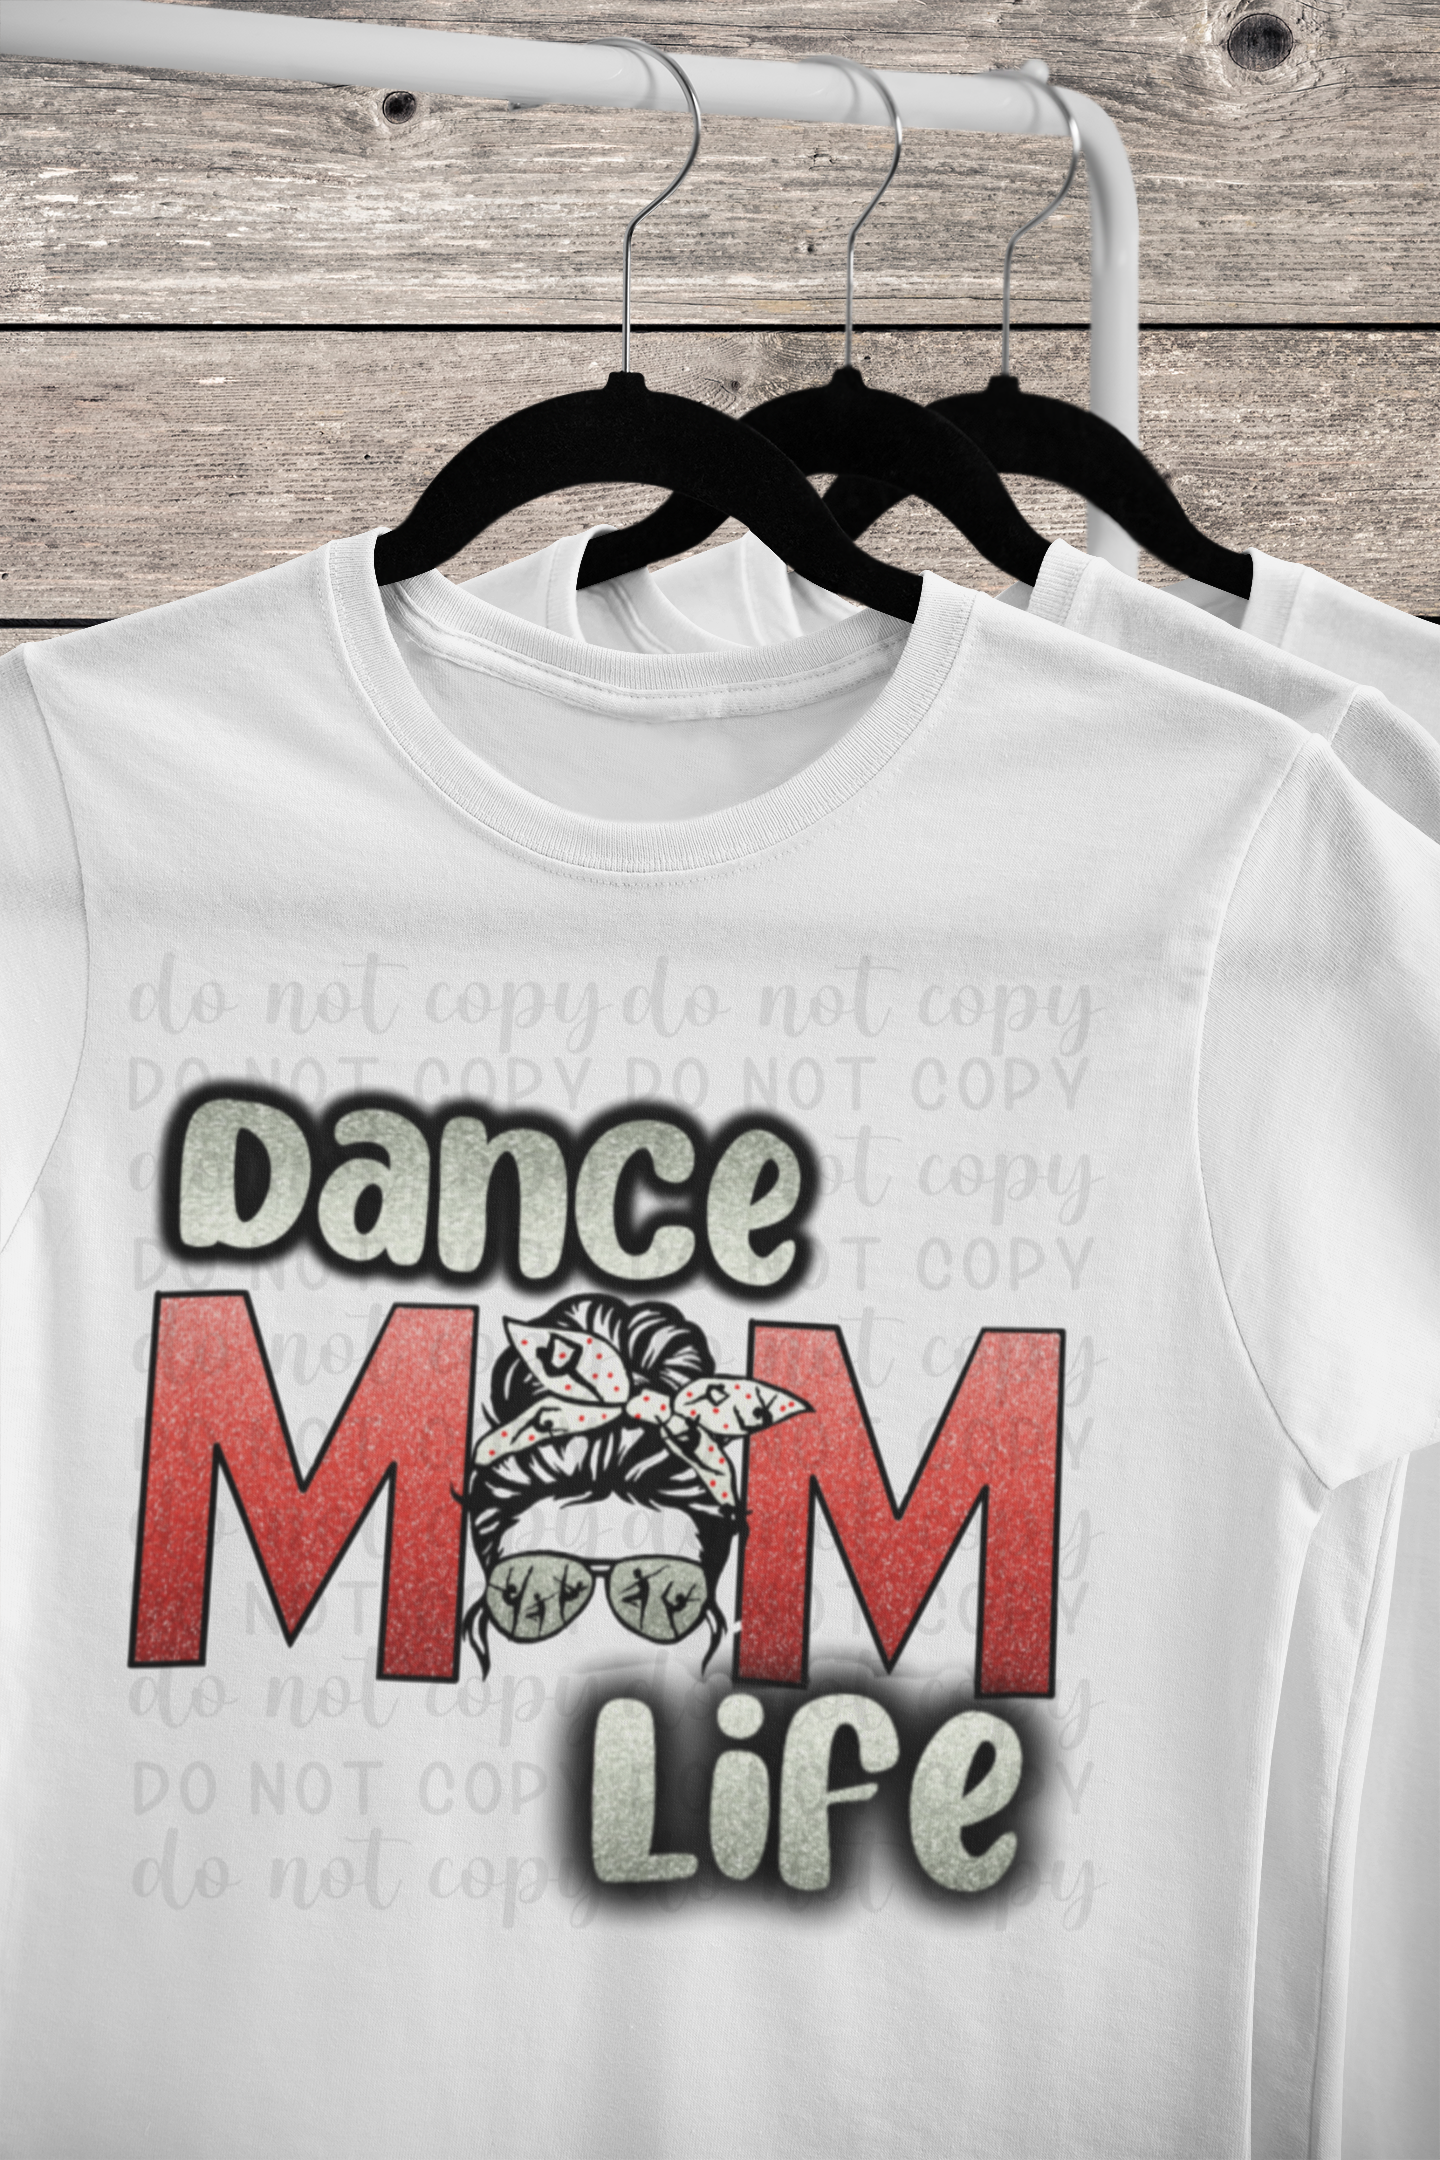 Dance mom life